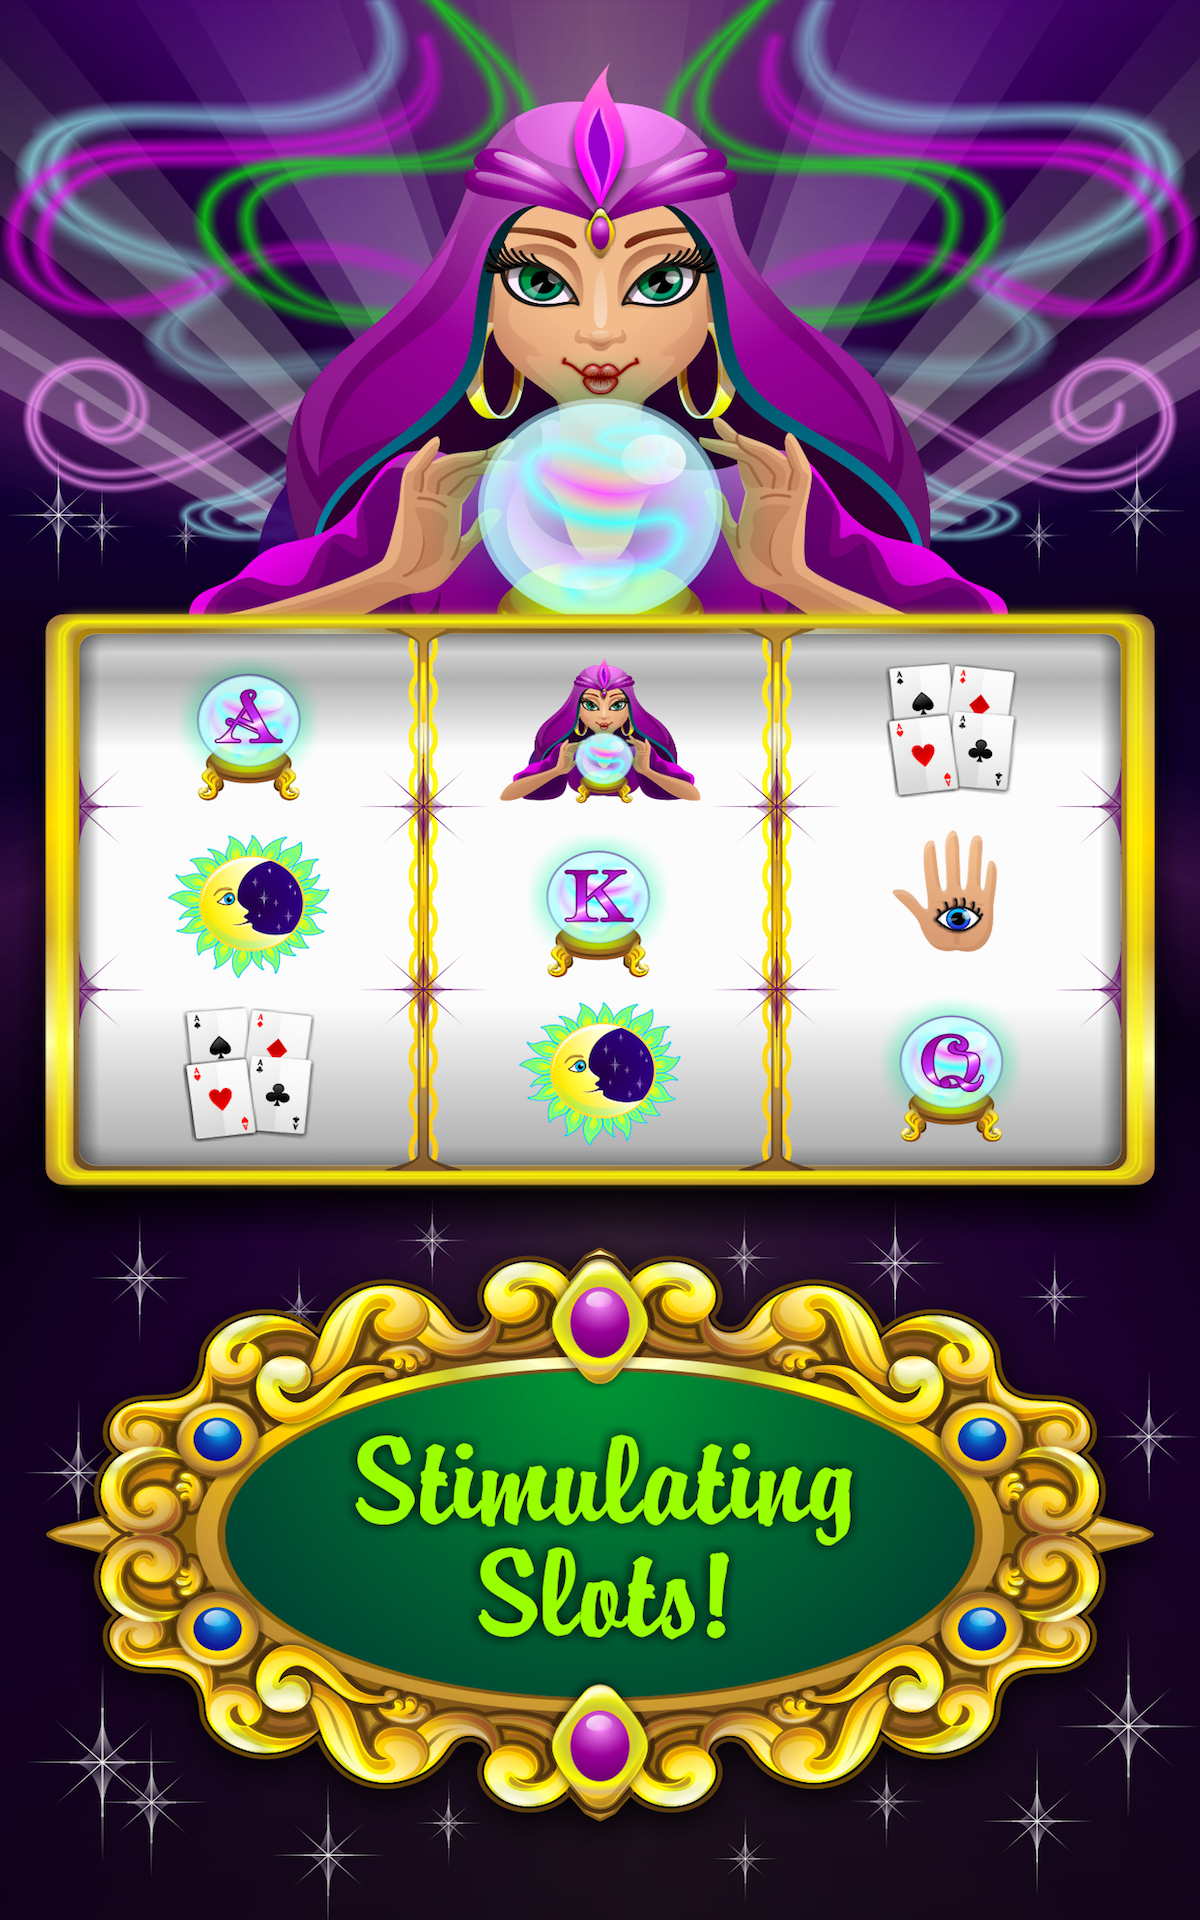 Tiradas gratis fortune teller slots vegas casino free coins 668188